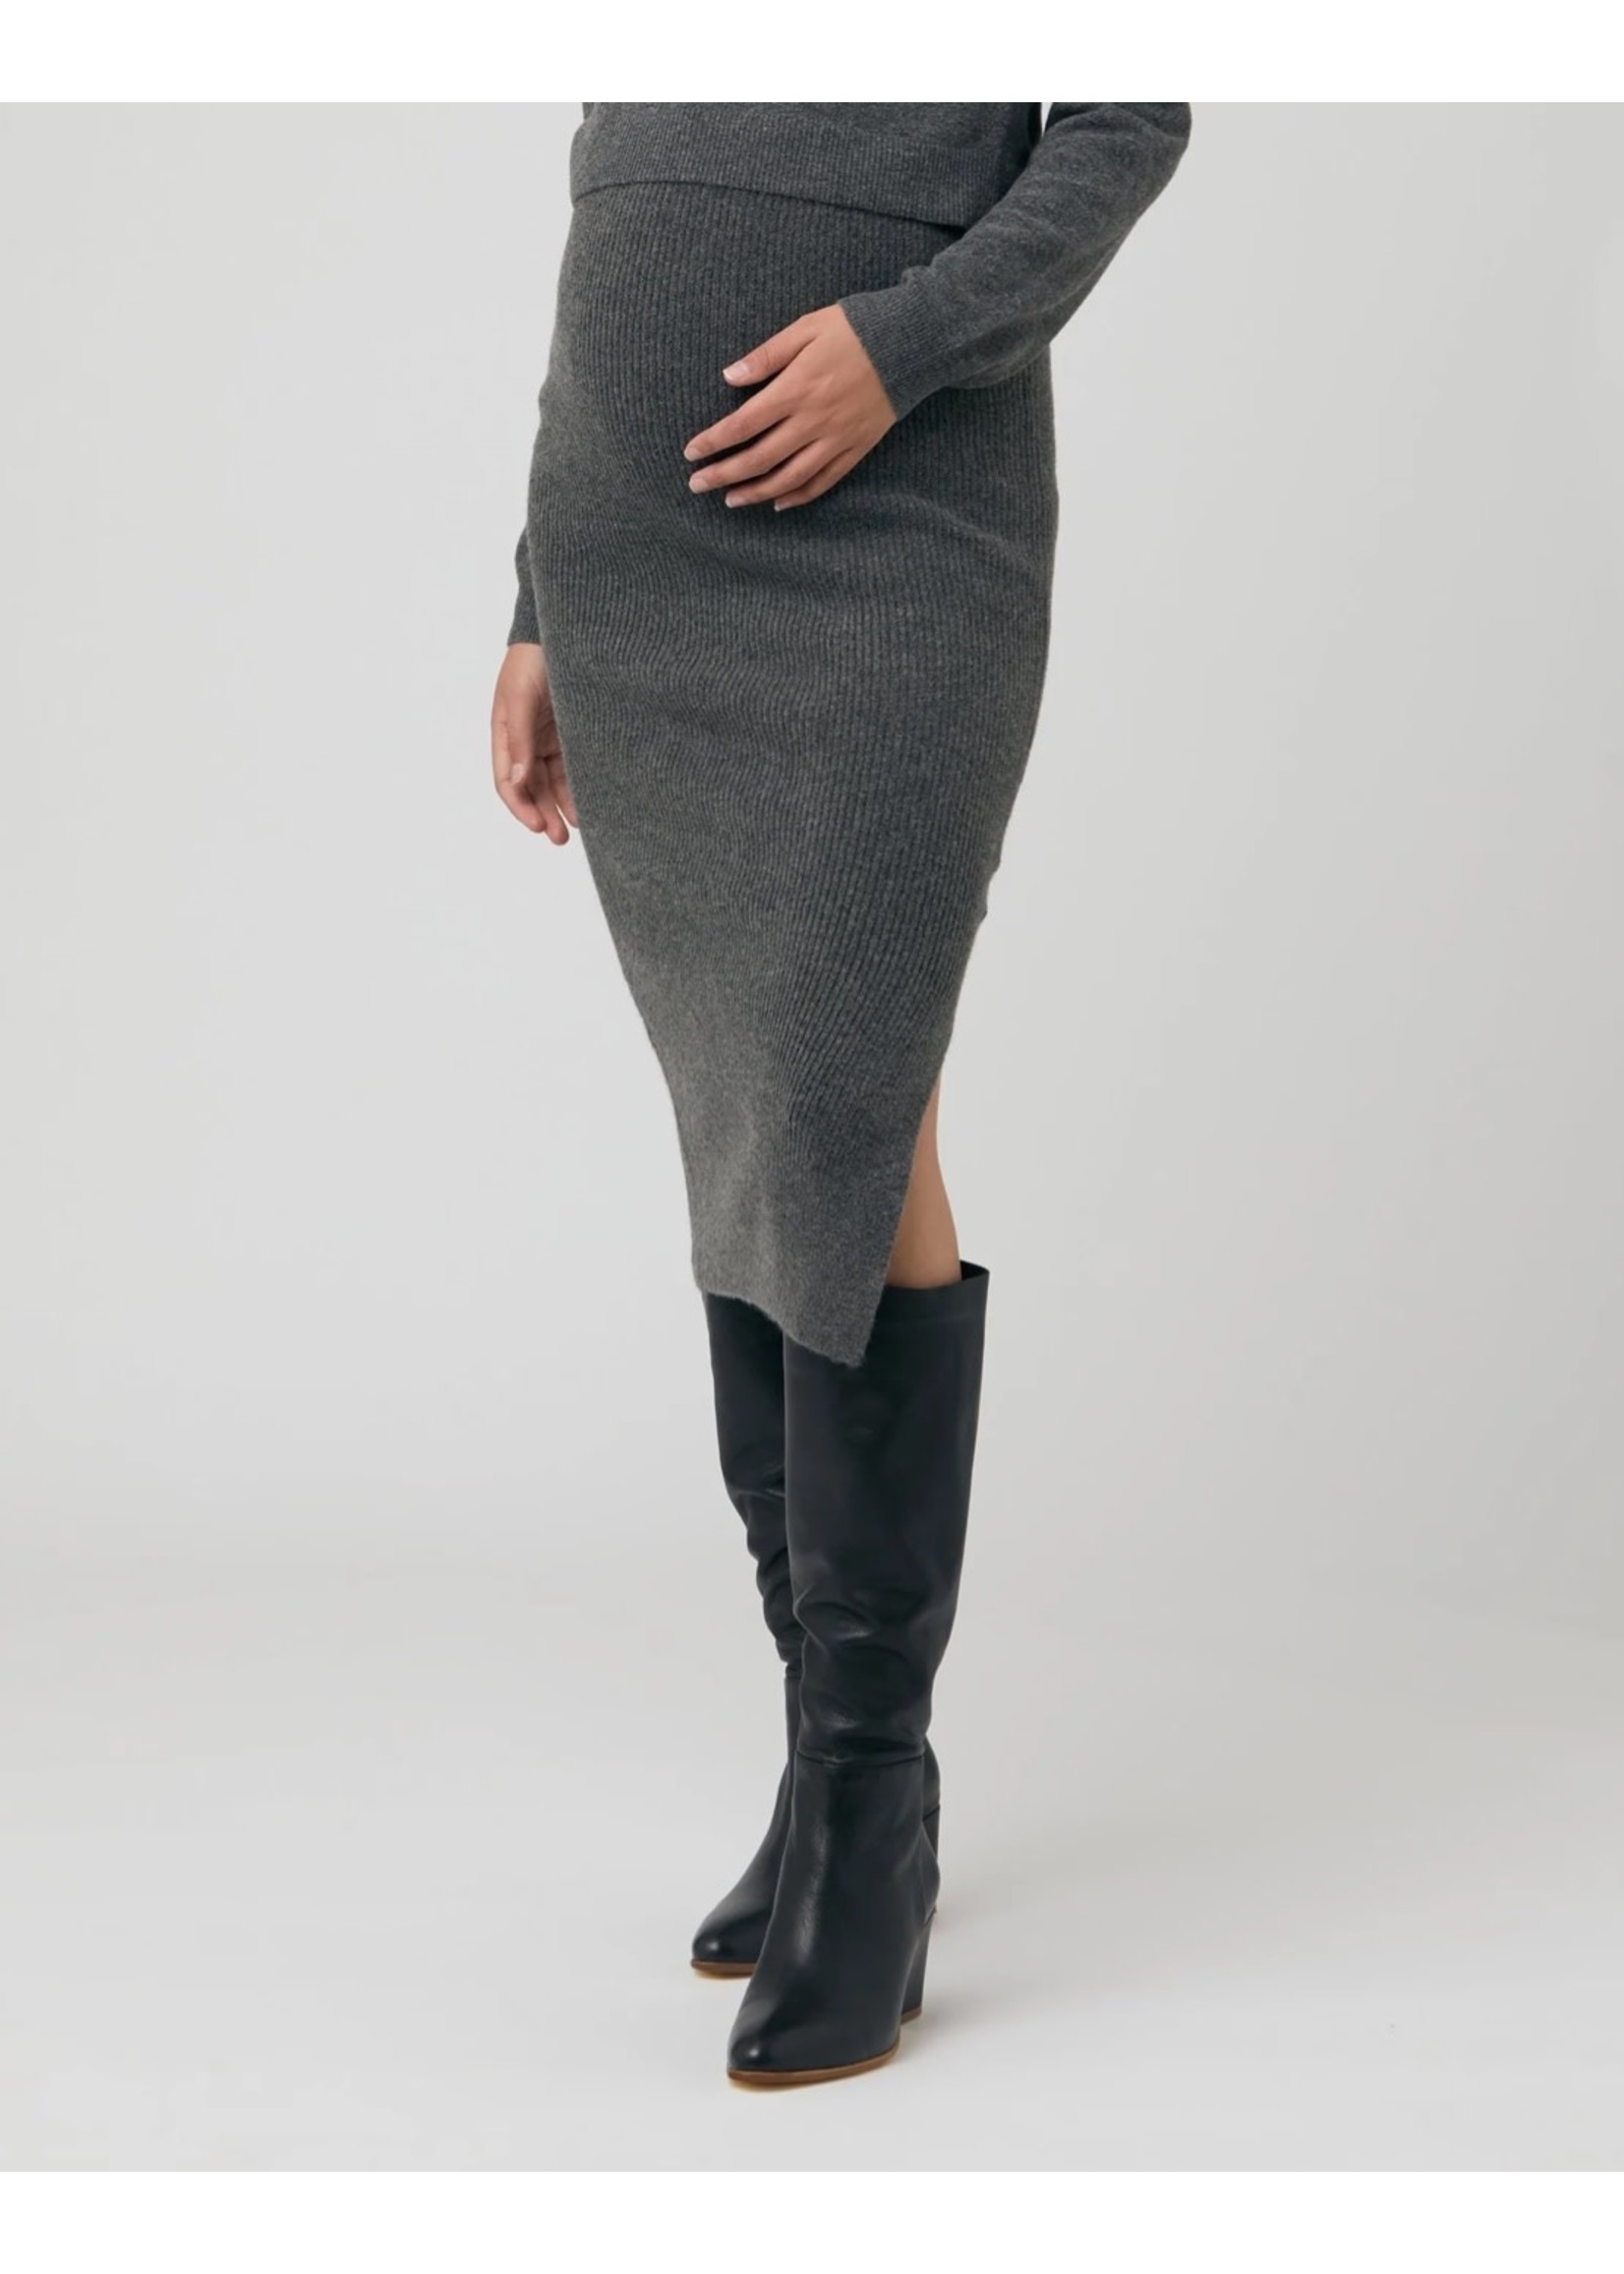 Ripe Maternity Ripe Maternity, Dani Knit Skirt in Charcoal Marle